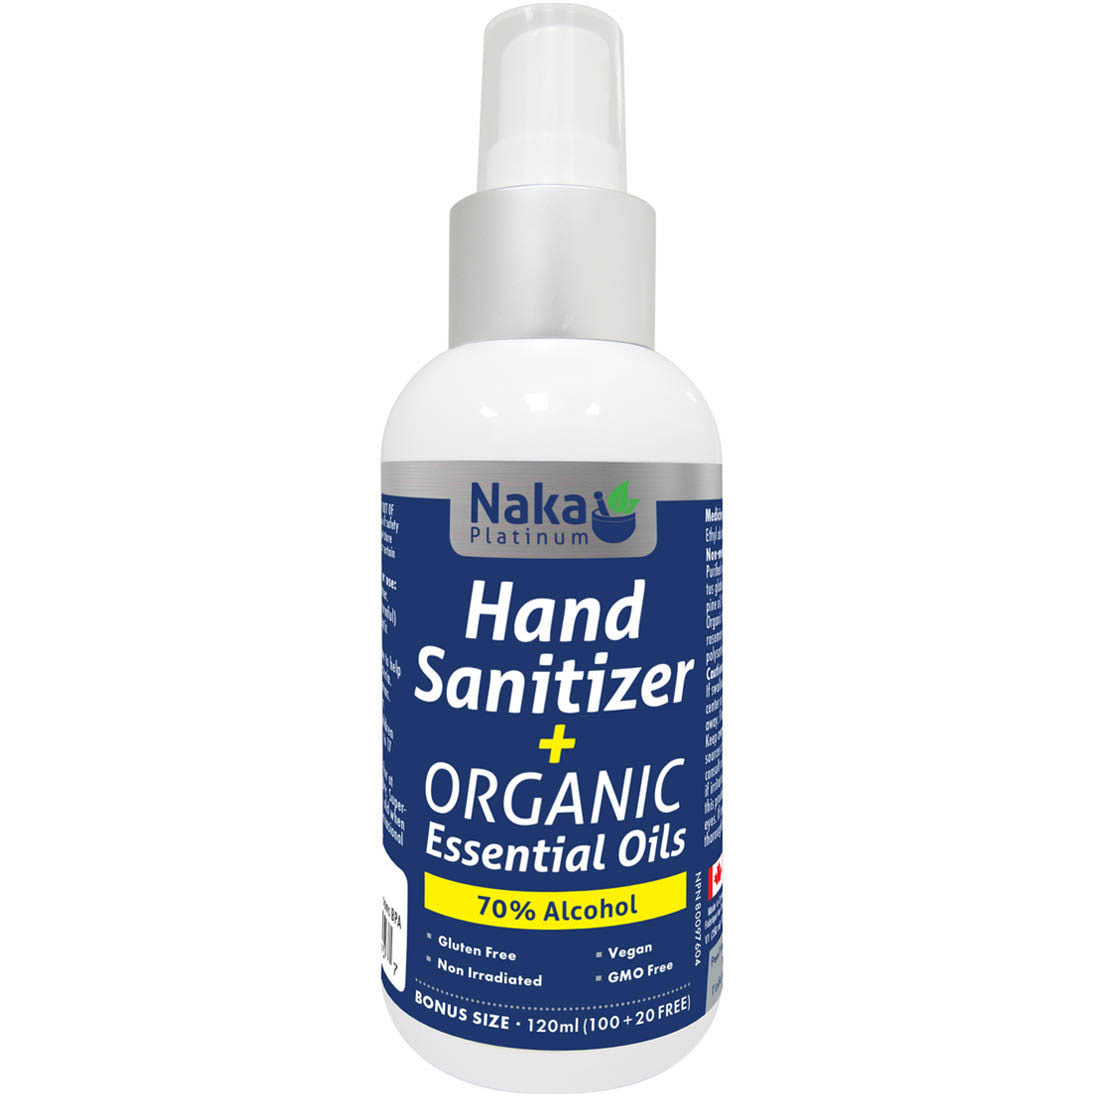 Naka Hand Sanitizer with Organic Essential Oils 120mL